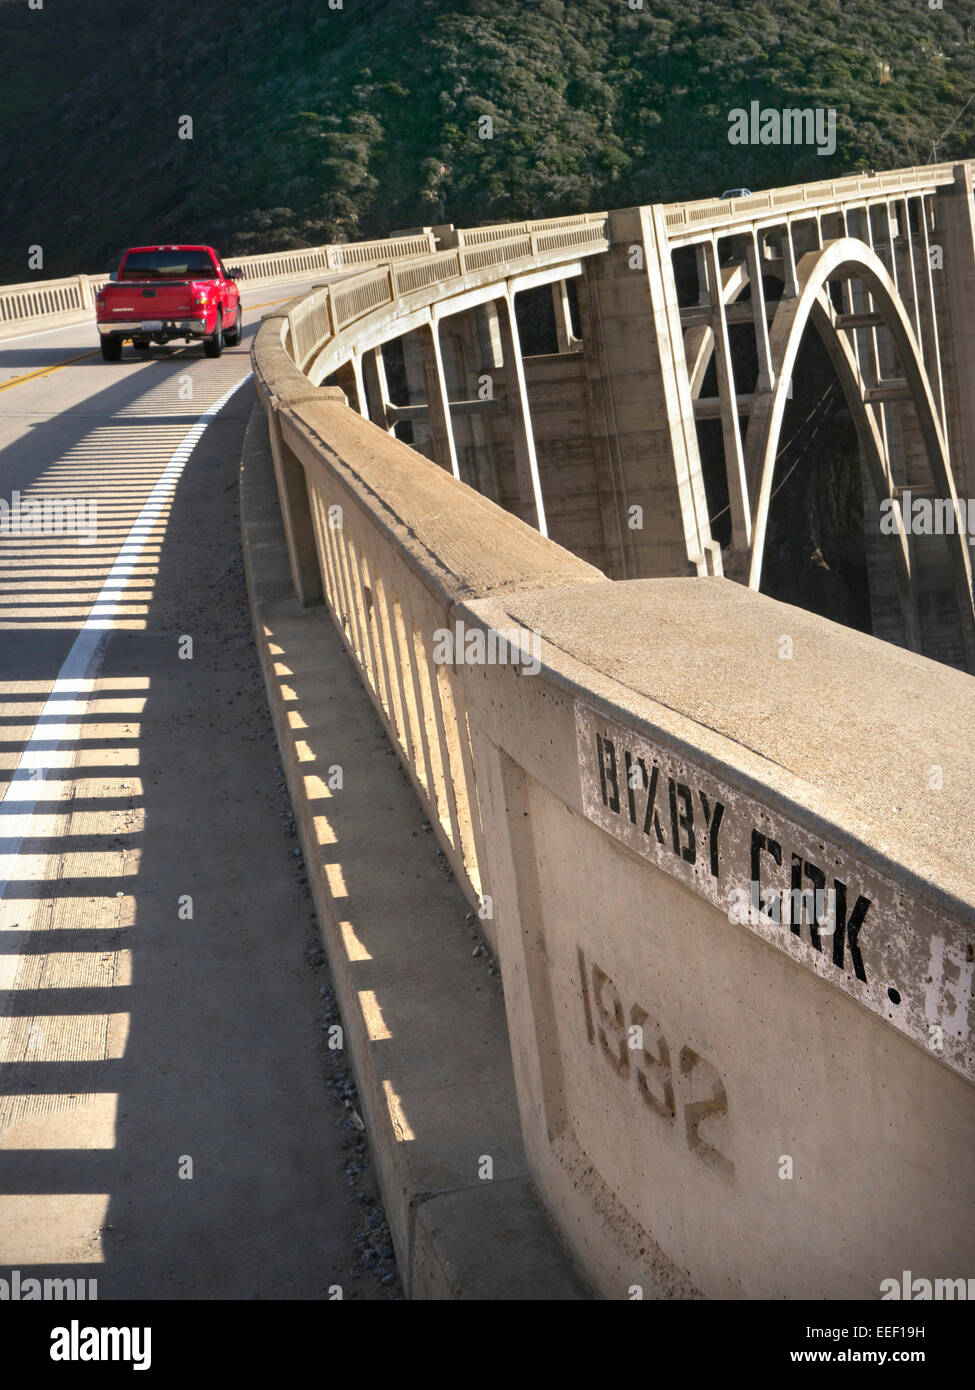 Red American pick-up truck crossing Bixby Bridge at Big Sur Highway 1 Monterey California USA Stock Photo